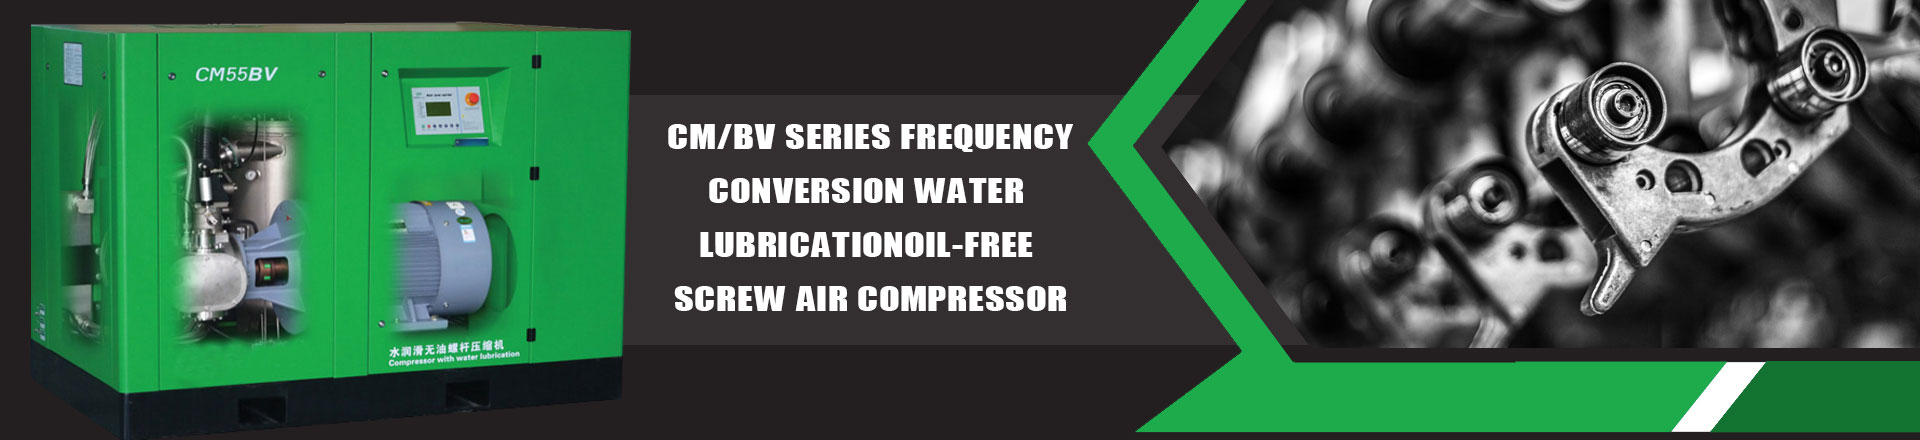 Oil Free Air Compressor Image